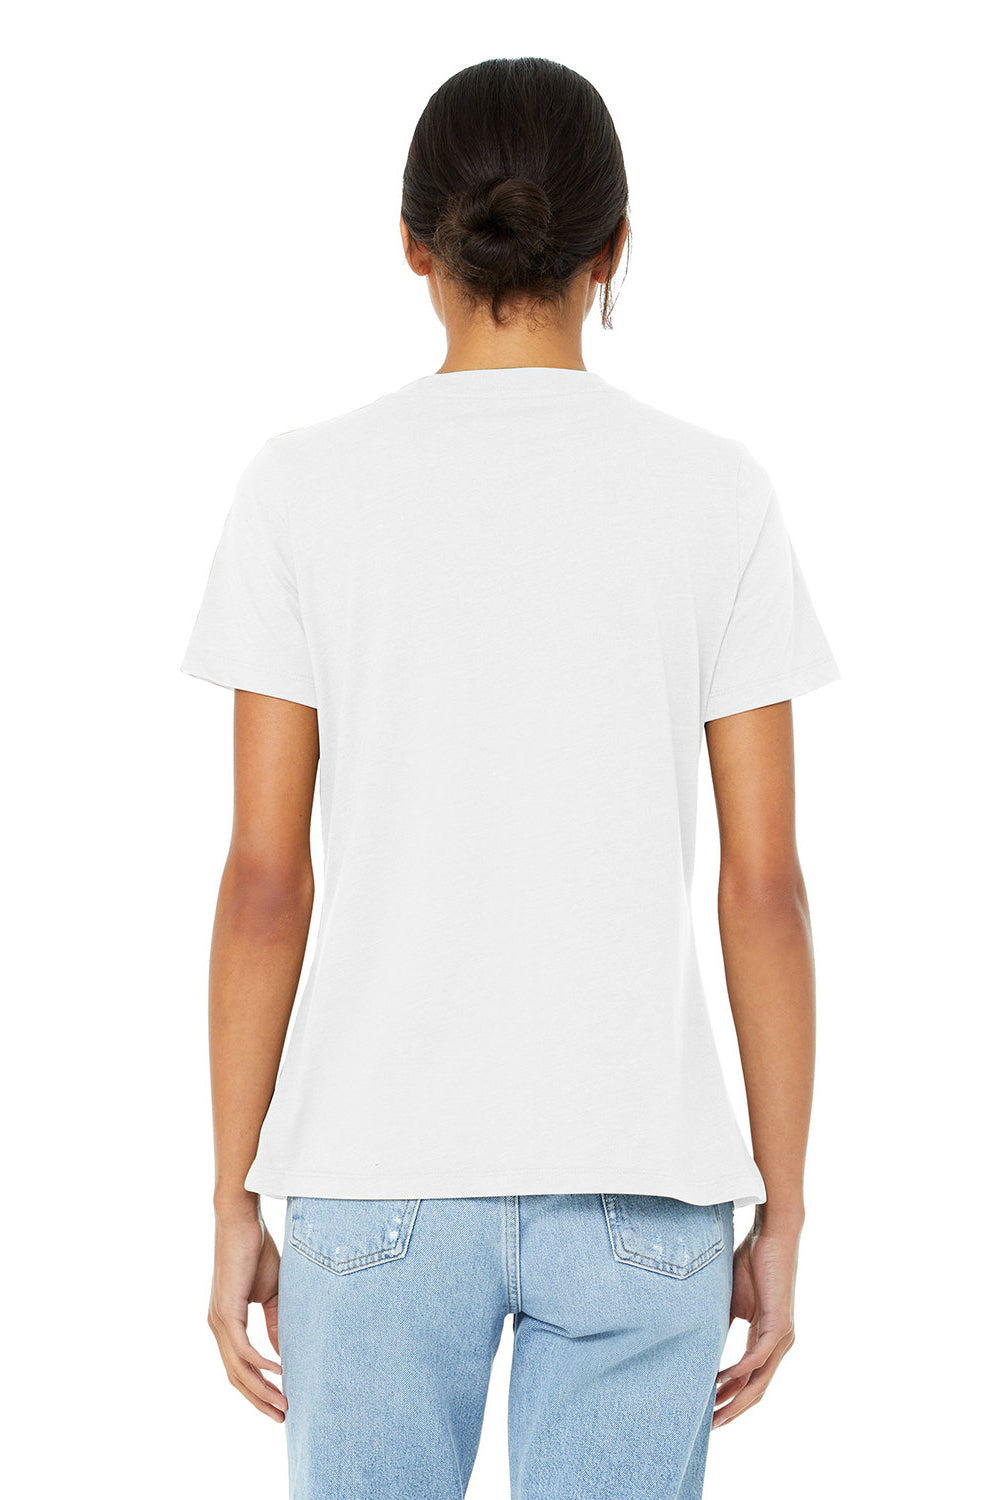 Bella + Canvas BC6405CVC Womens CVC Short Sleeve V-Neck T-Shirt Solid White Model Back